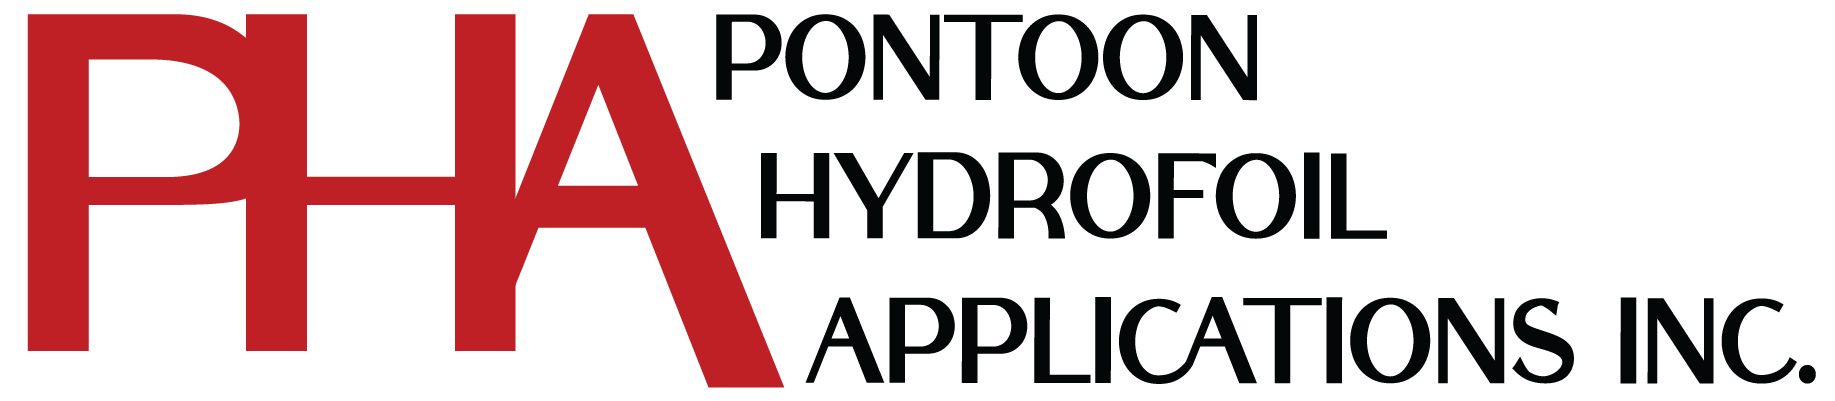 Pontoon Hydrofoil Applications Inc Logo